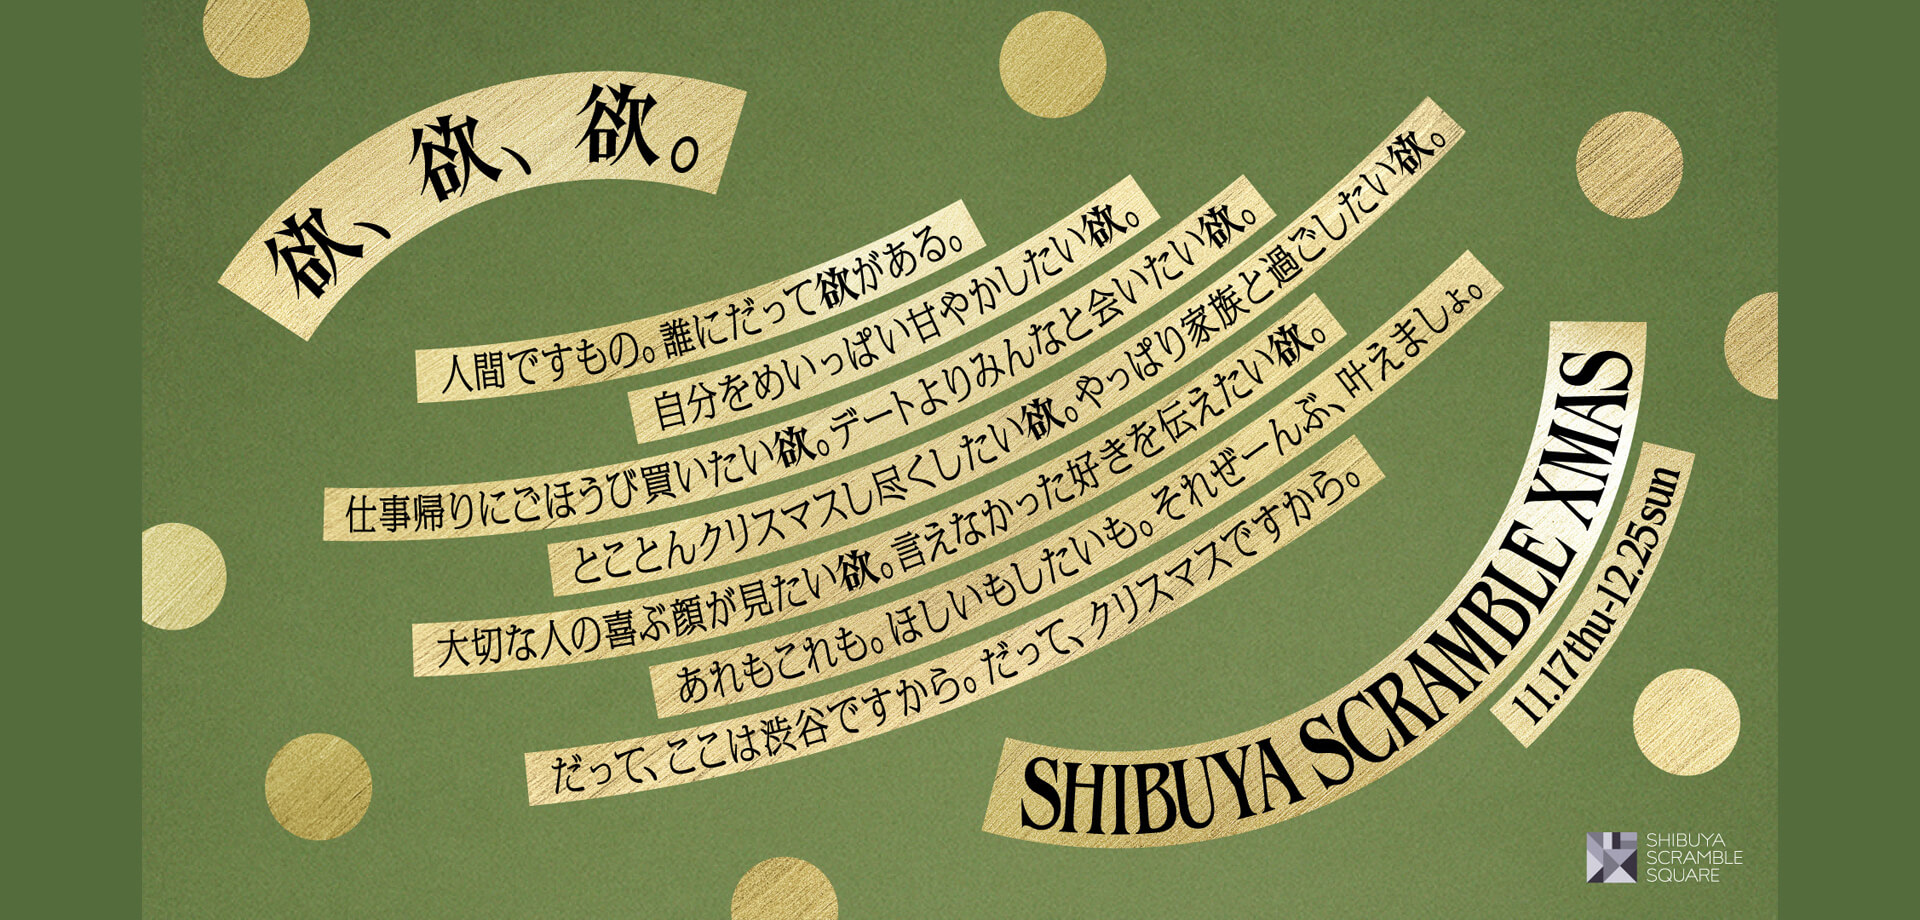 SHIBUYA SCRAMBLE XMAS 渋谷